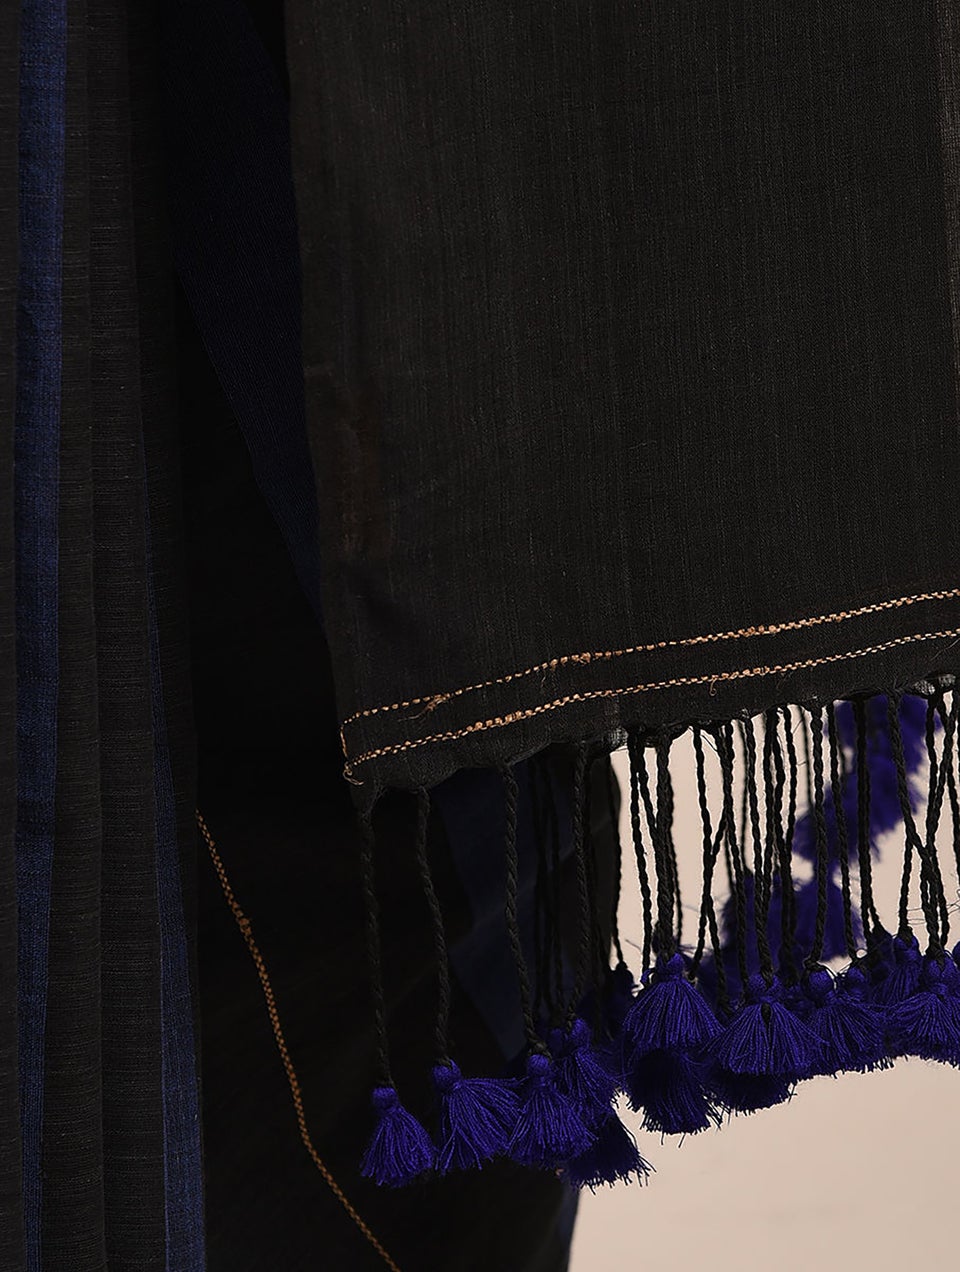 Women Black Handwoven Cotton Saree